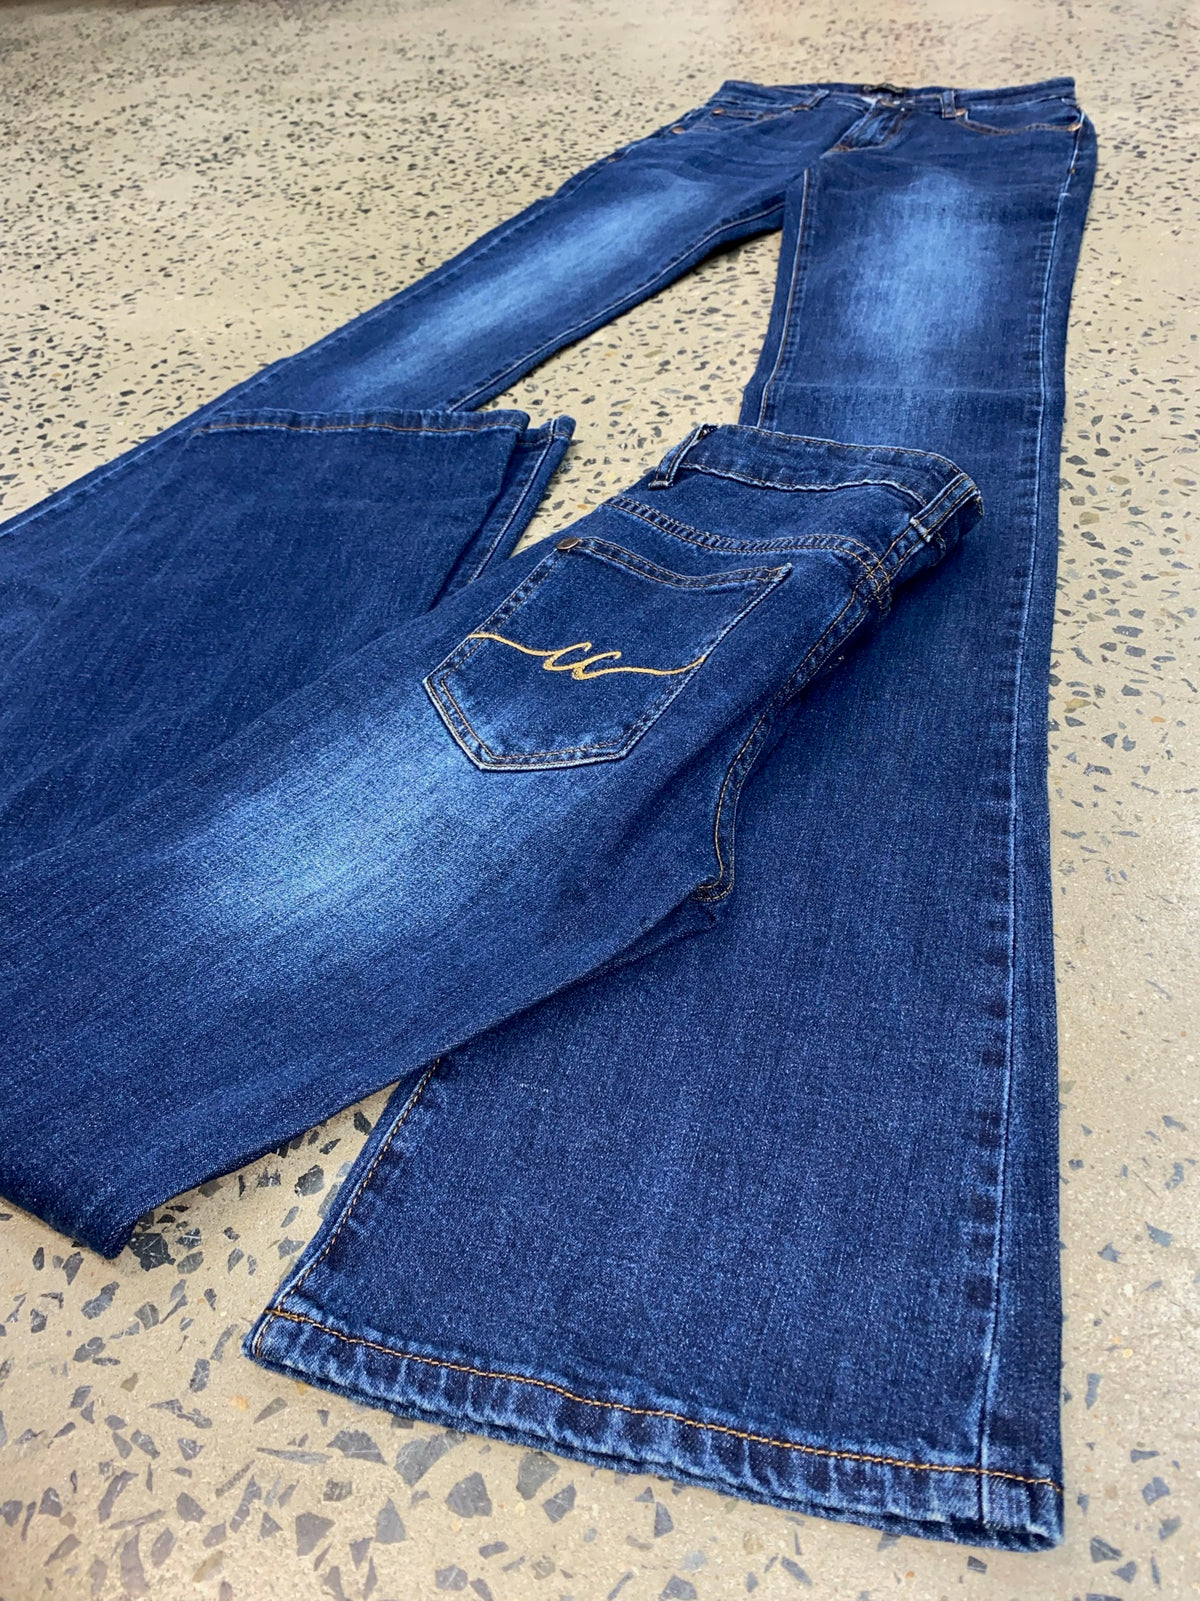 CC Western Jeans - Signature Hybrid Jeans